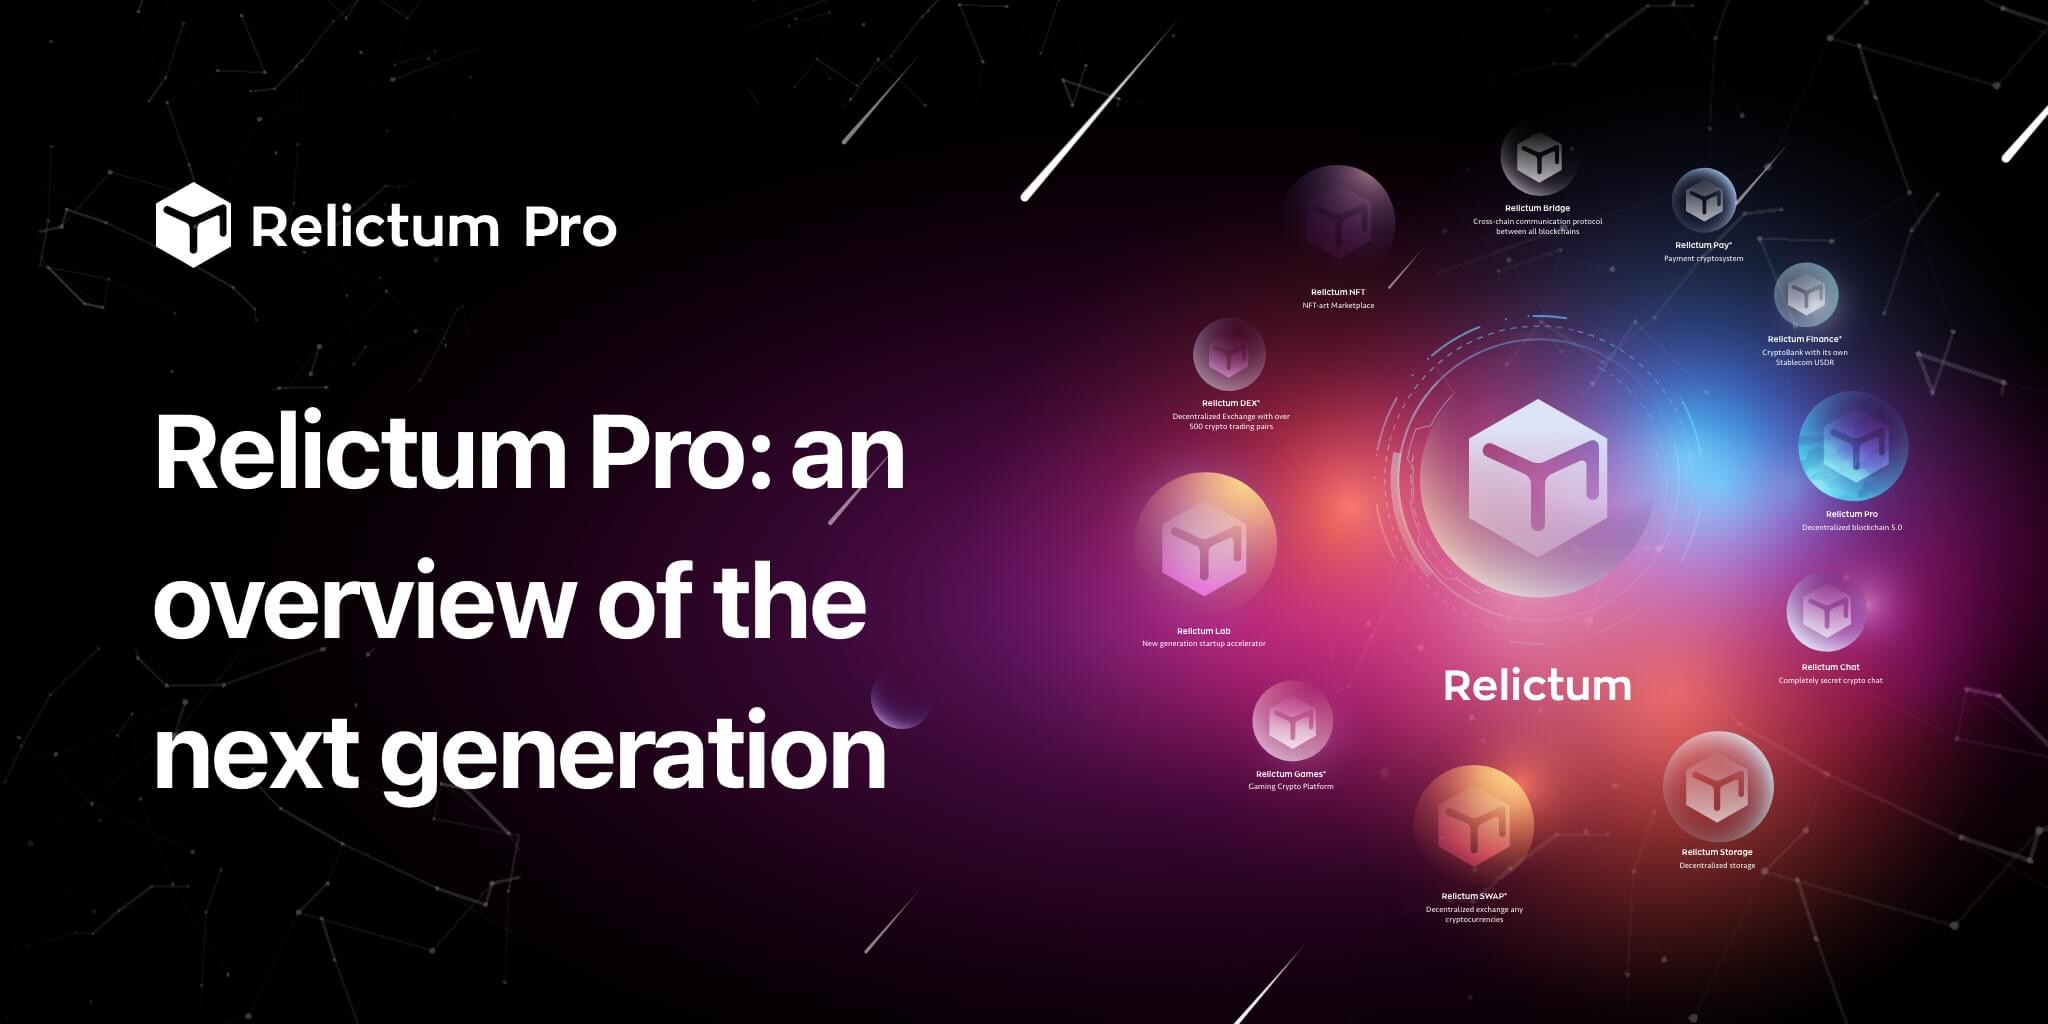 Relictum Pro: an overview of the next generation Blockchain 5.0 platform